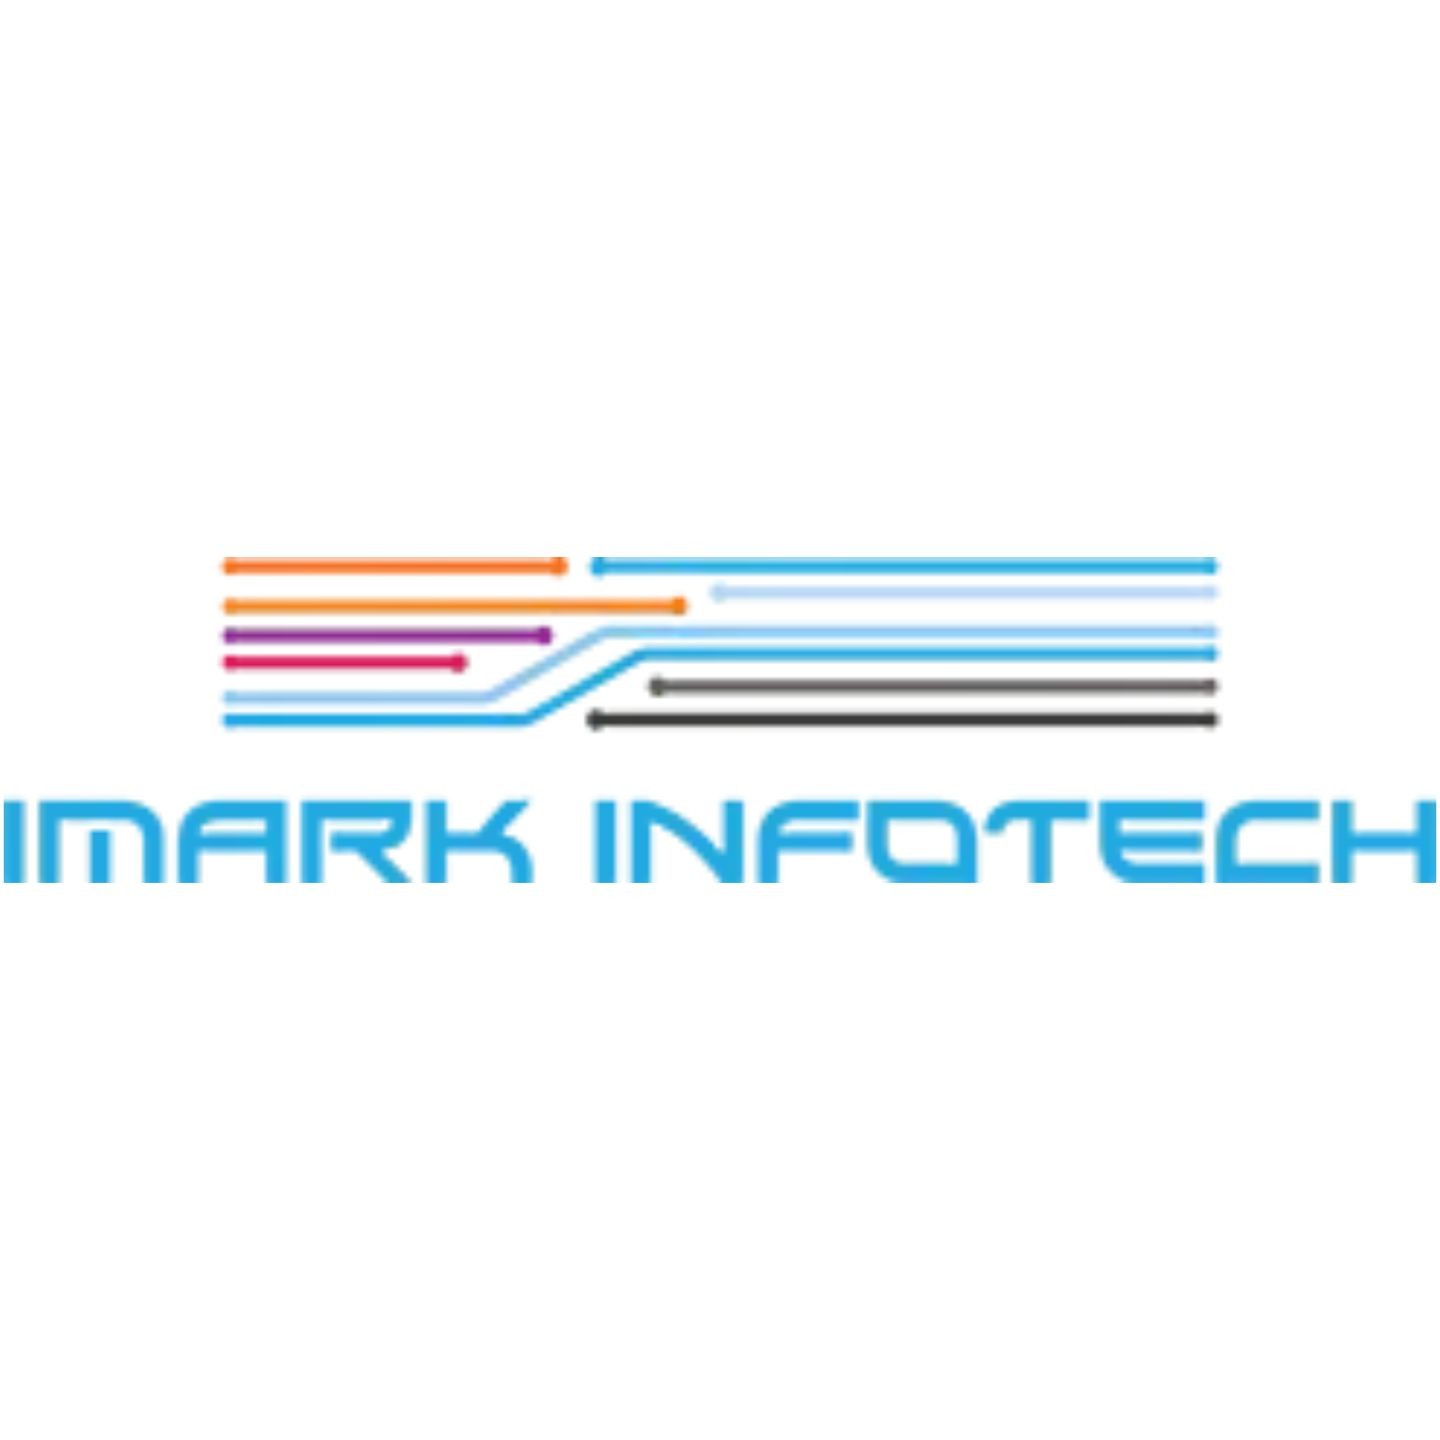 iMark Infotech GPT